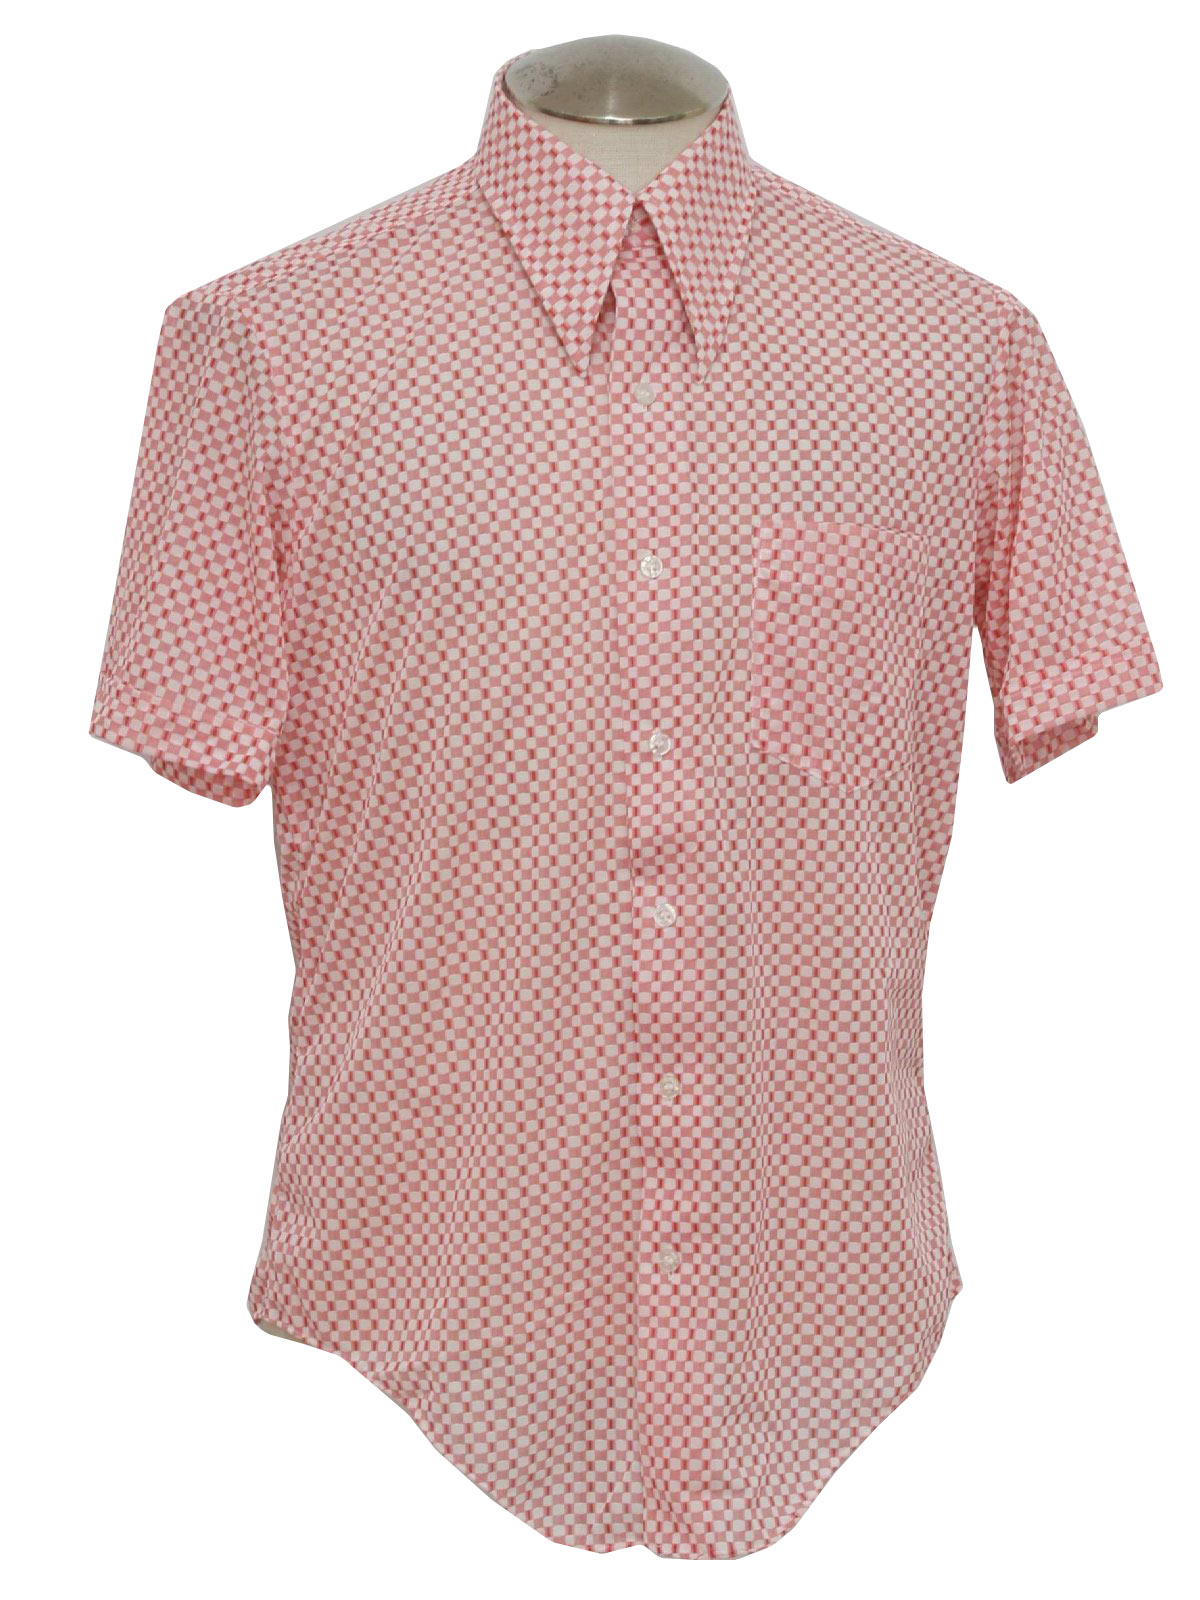 Seventies Debonair Print Disco Shirt: 70s -Debonair- Mens red and white ...